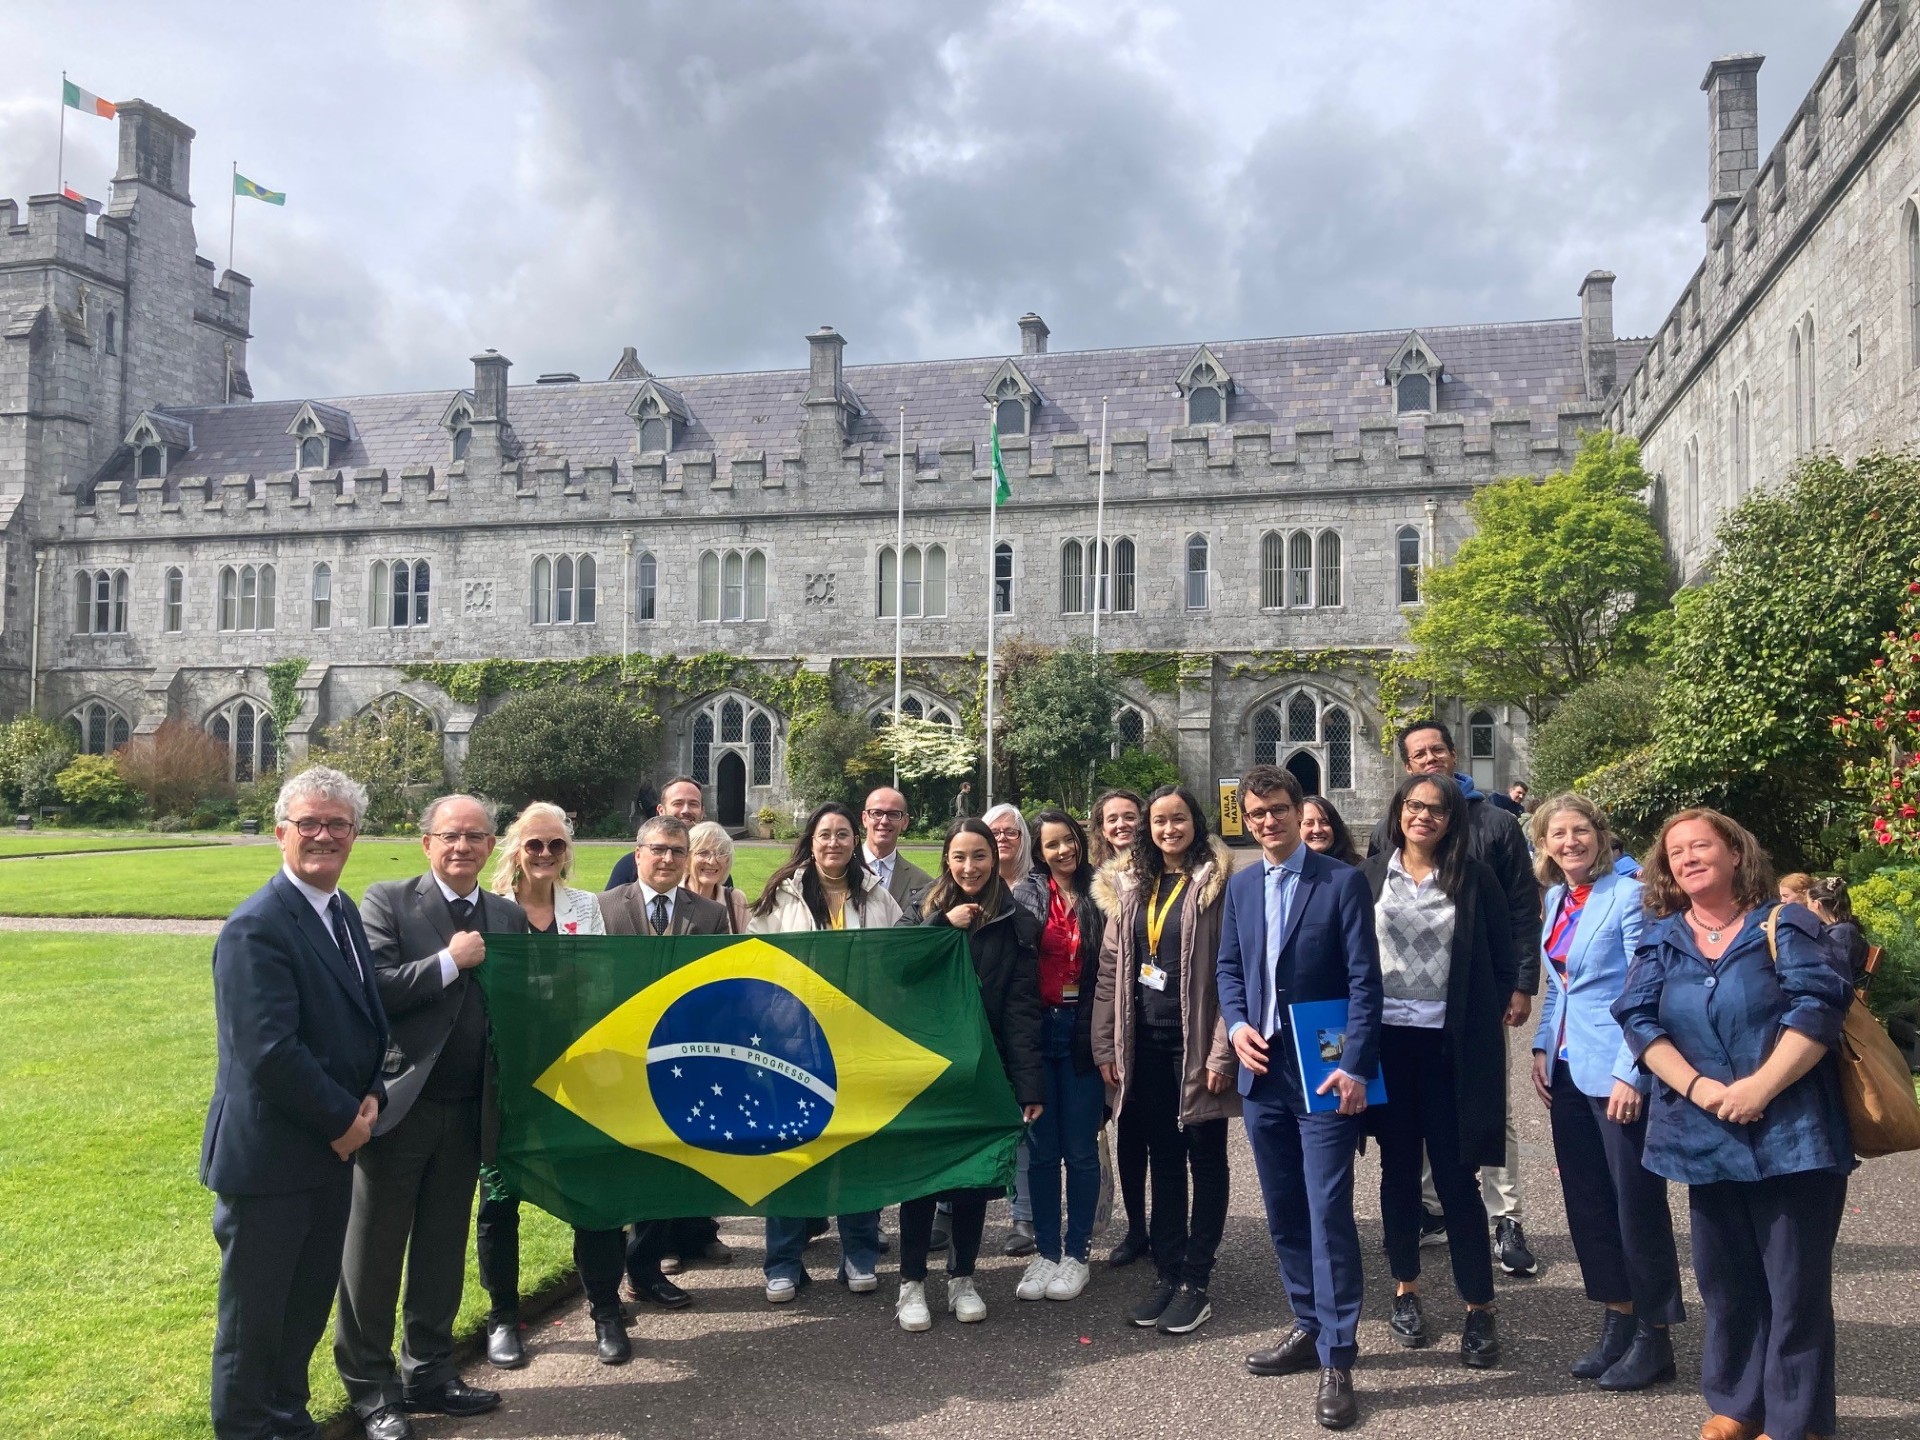 Brazil Day Celebrated at University College Cork
